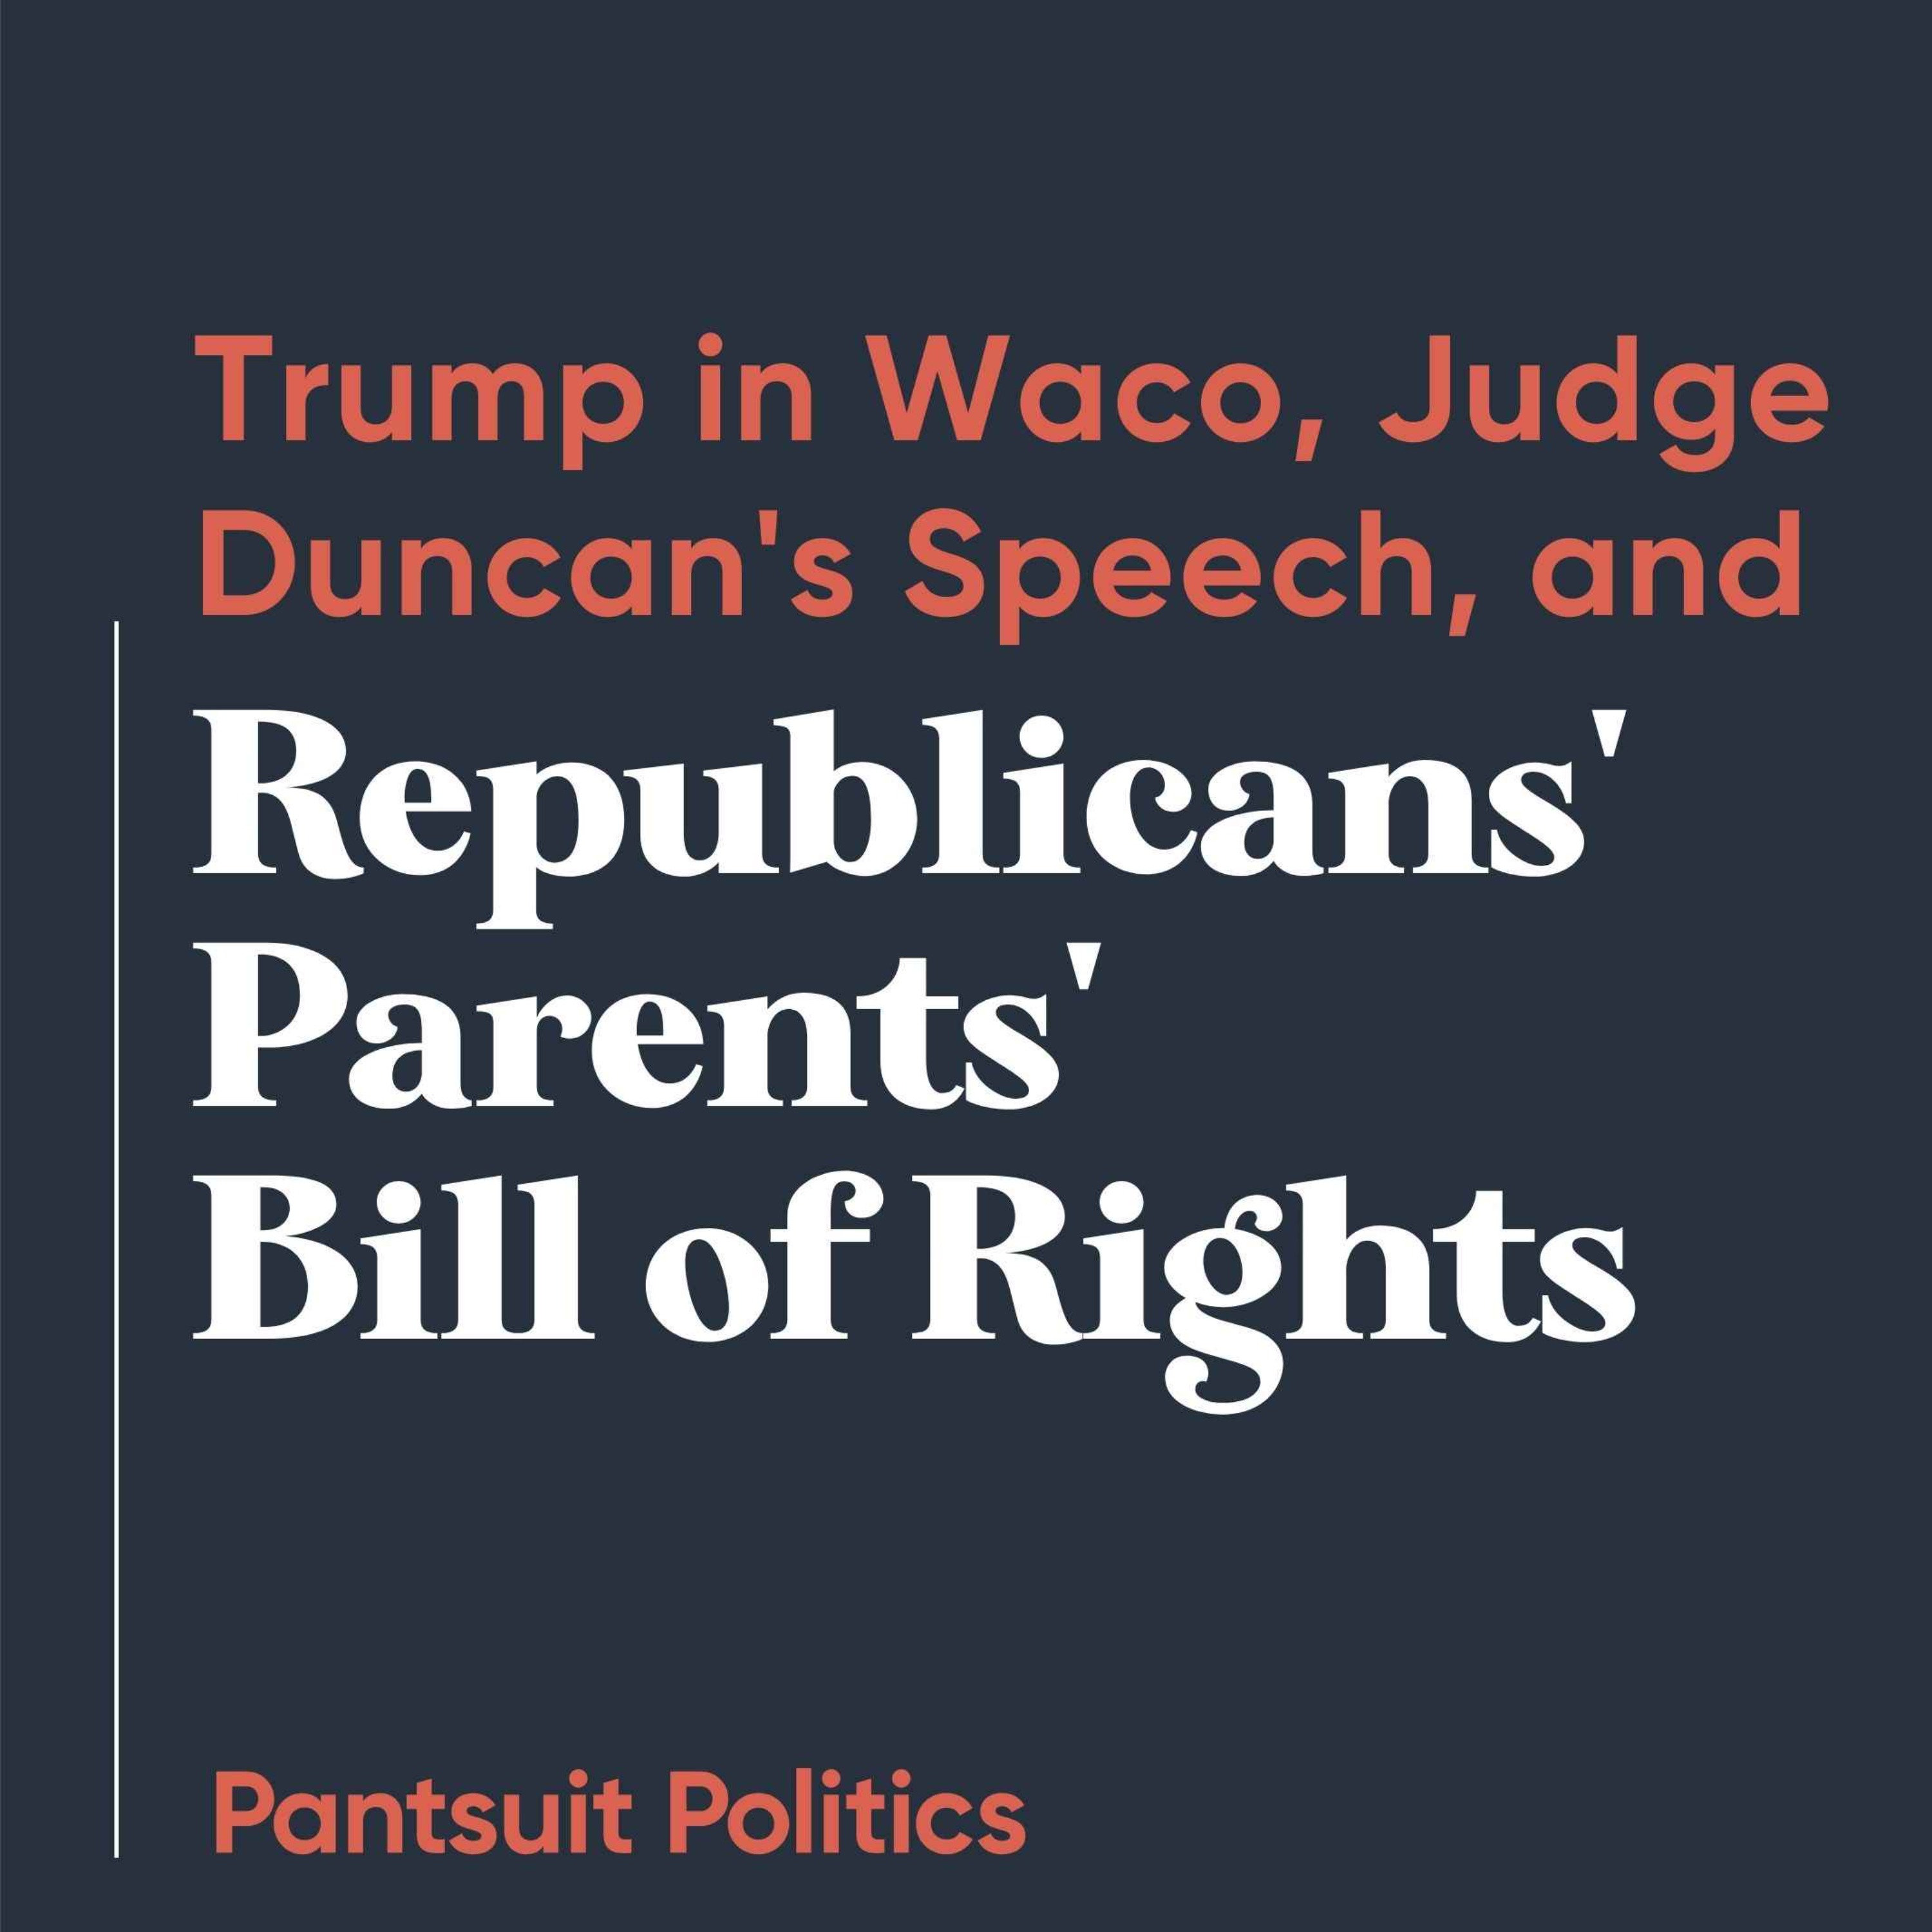 Trump in Waco, Judge Duncan's Speech, and Republicans’ Parents' Bill of Rights